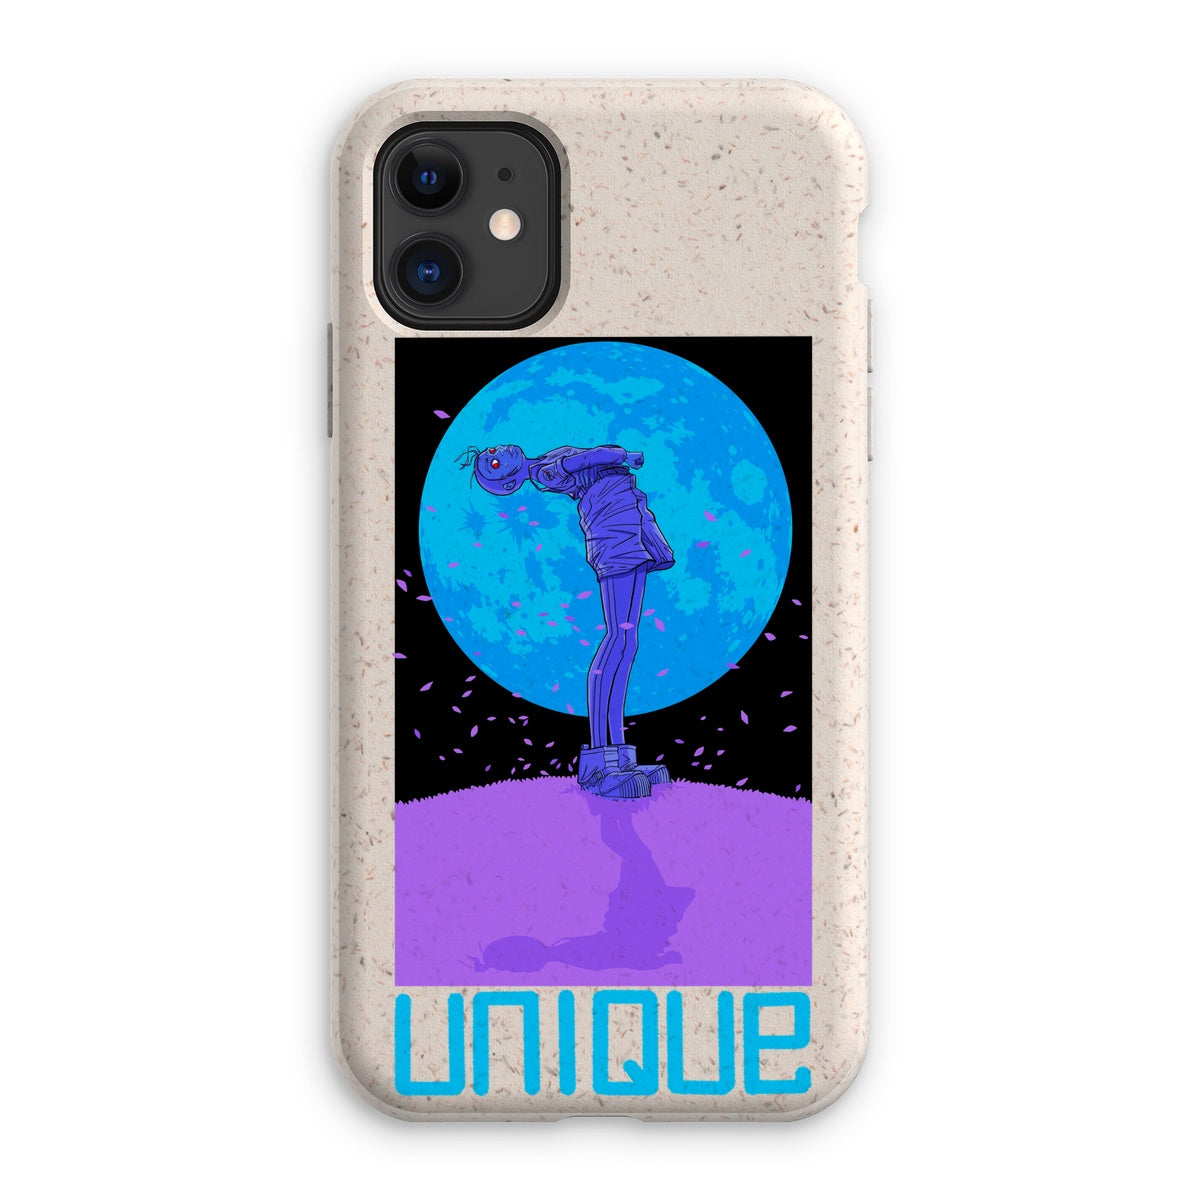 Unique and cool moonchild phone case illustration